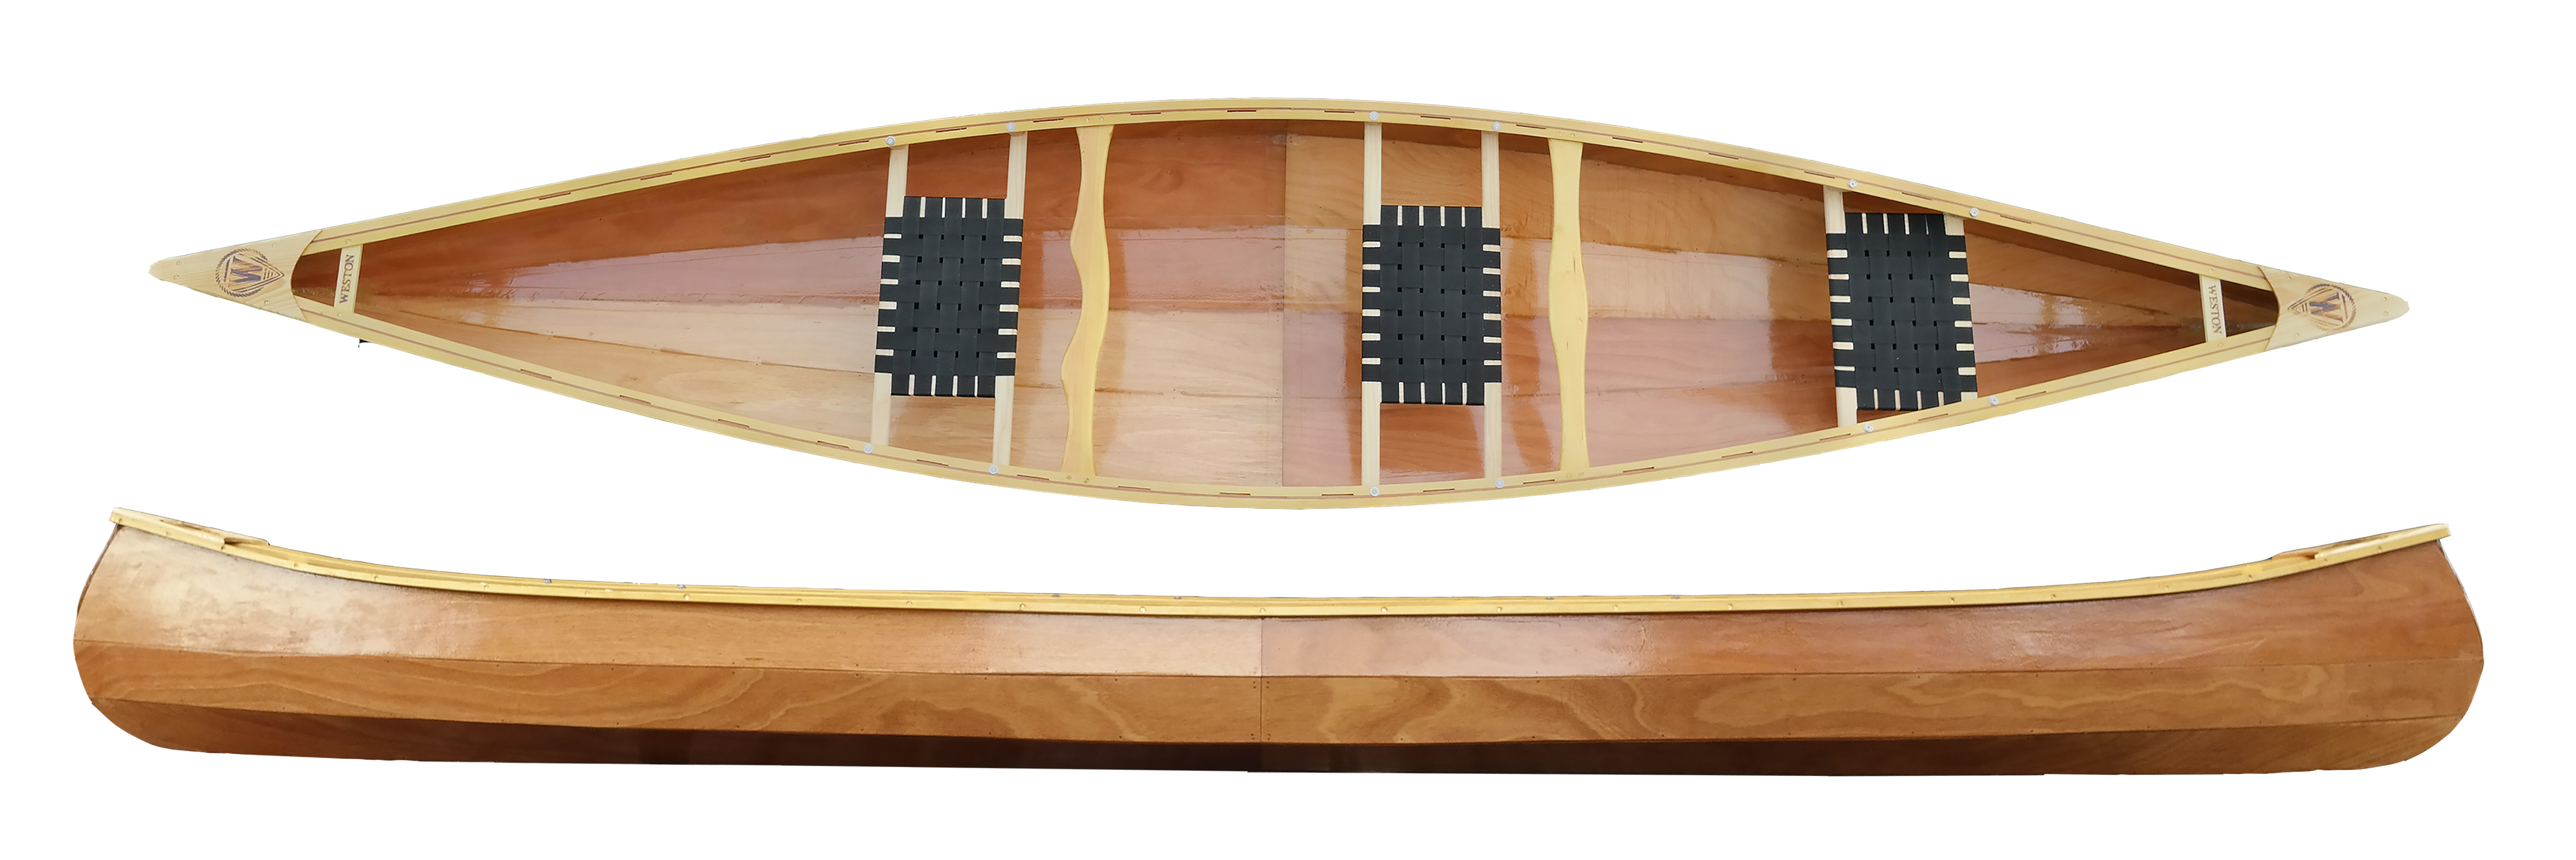 wooden canoe 